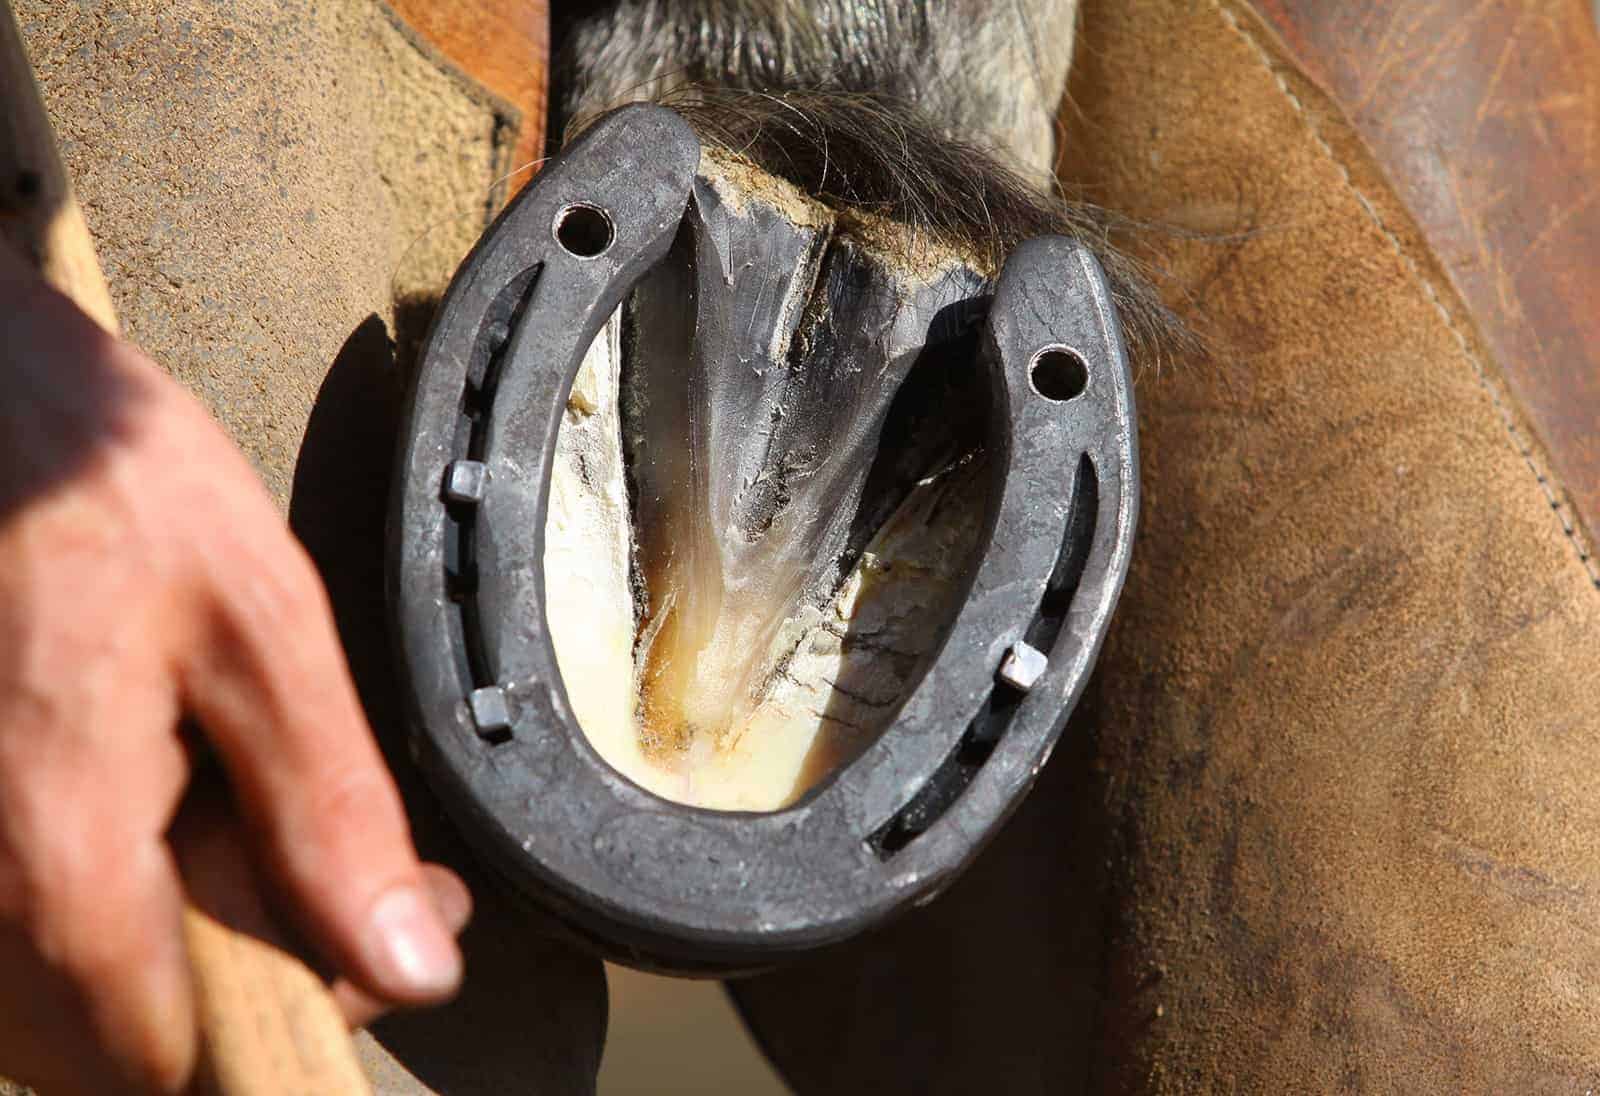 clean trax horse hoof treatment